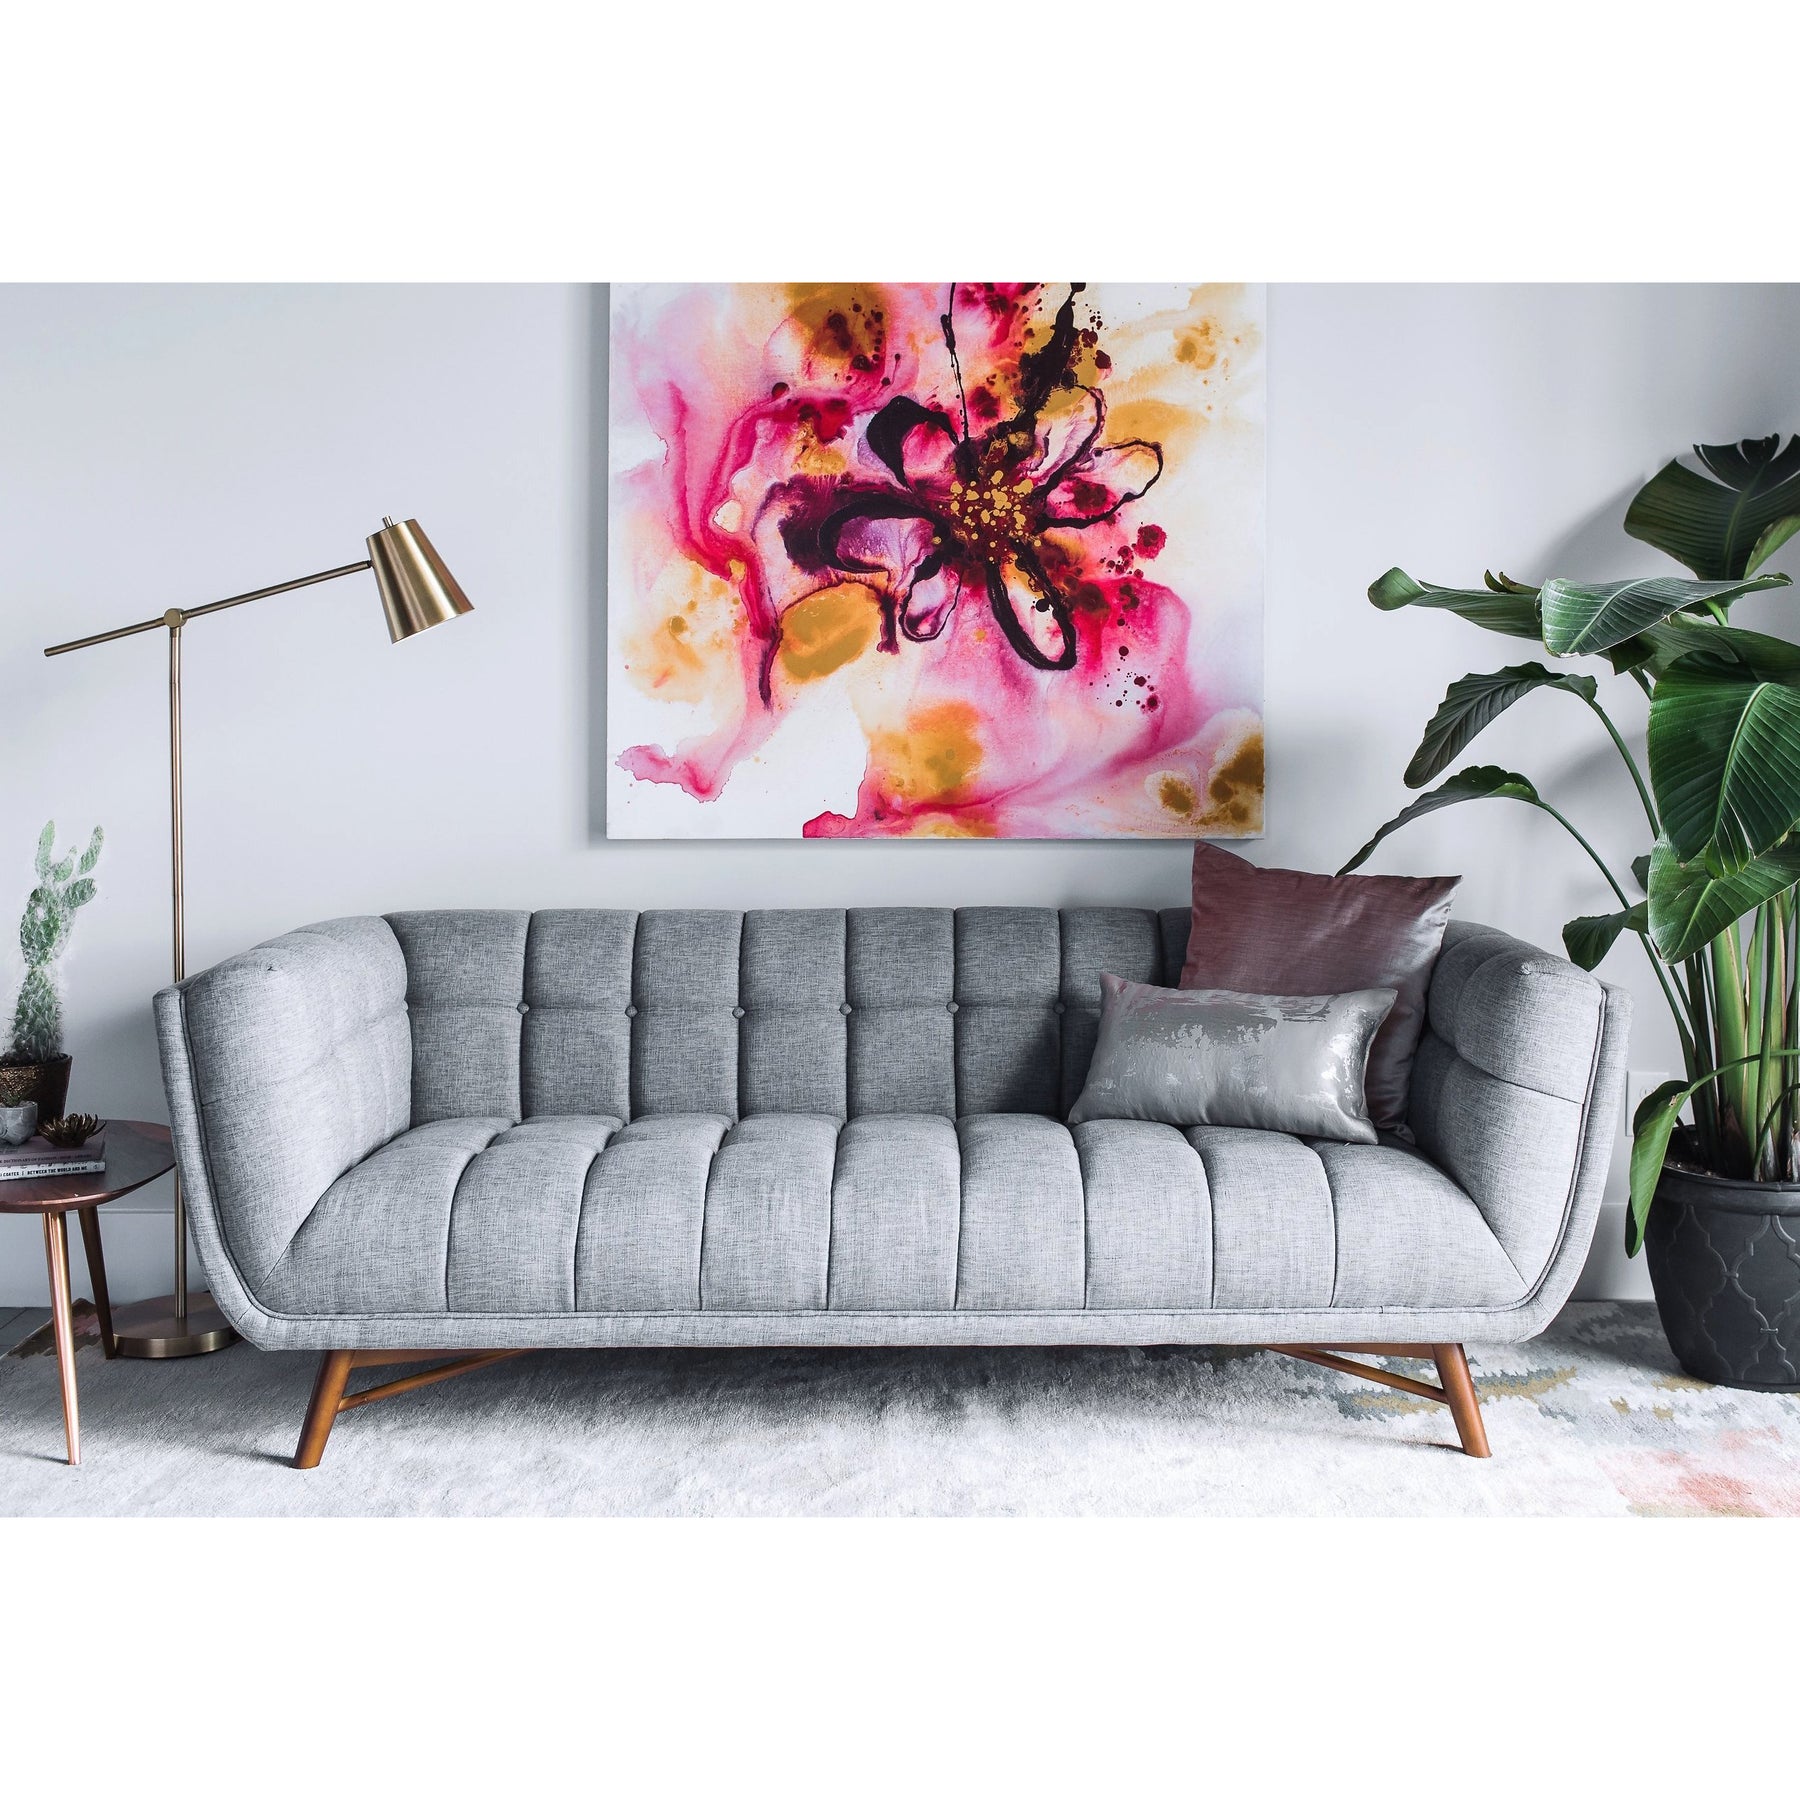 Edloe Finch Zola Mid-Century Modern Sofa